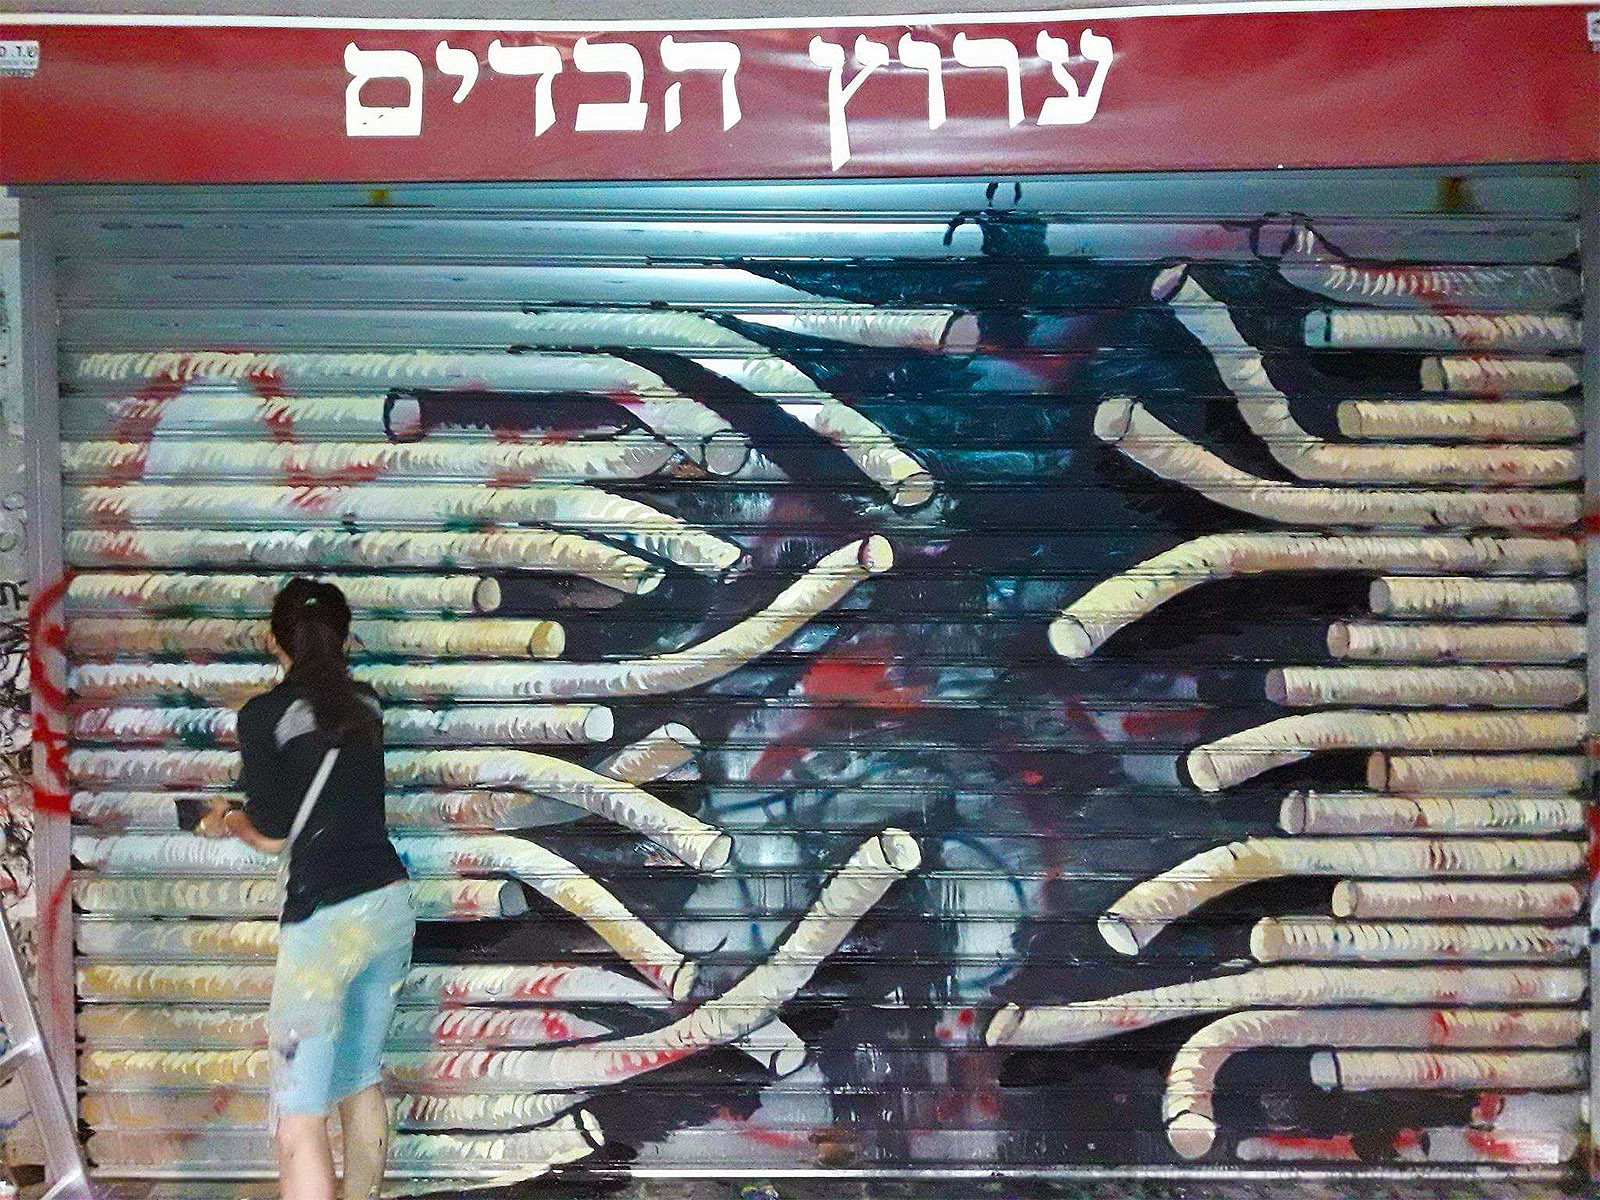 Graffiti by Ana Kogan in Nachalat Binyamin - Tel Aviv